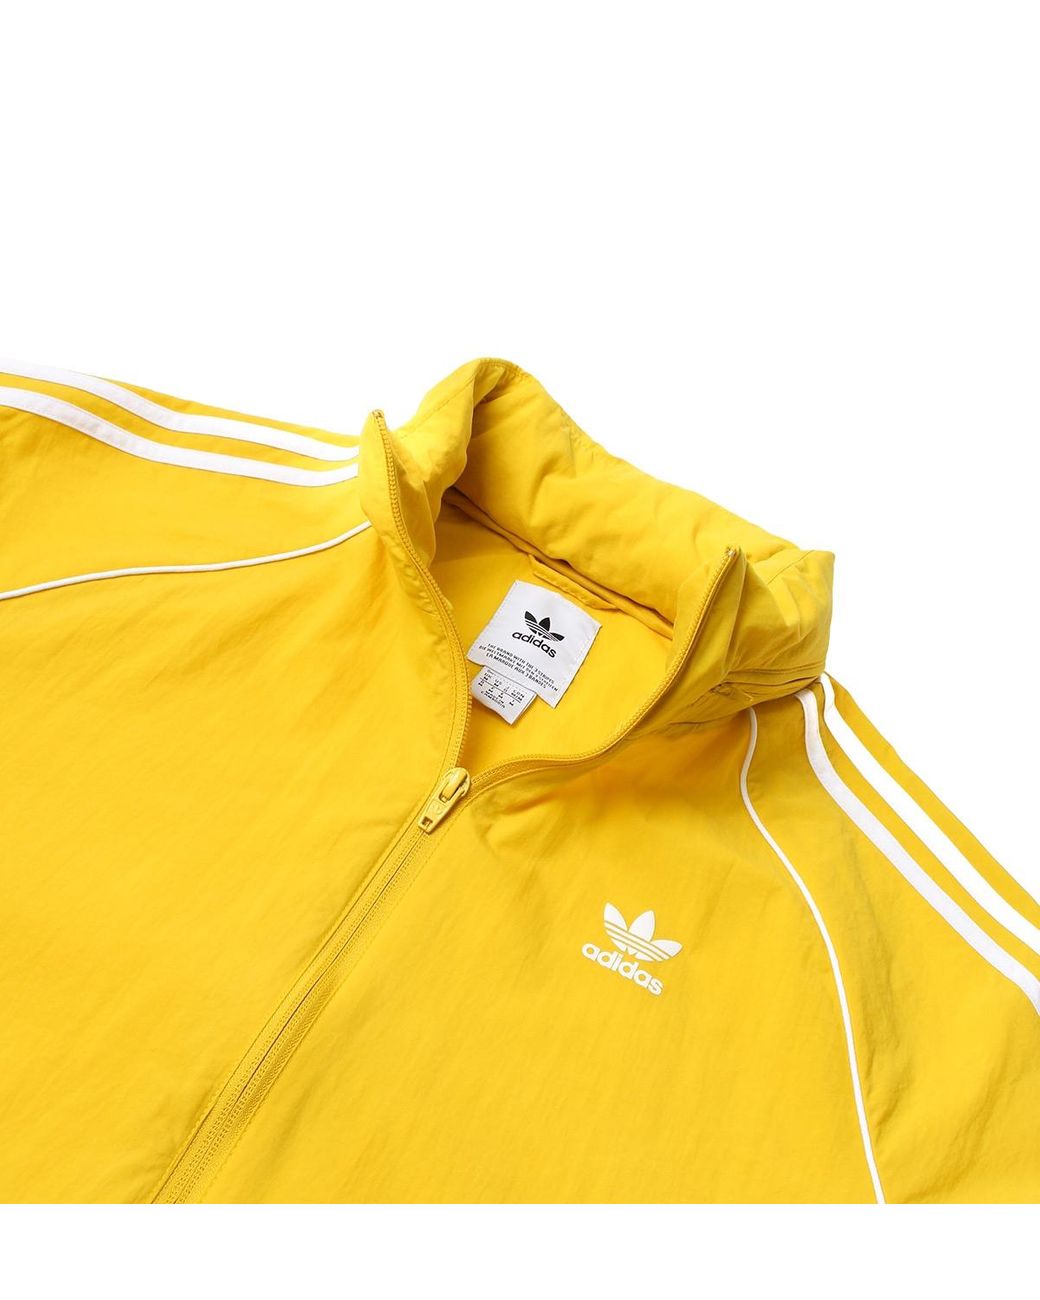 adidas Originals Yellow Sst Windbreaker Jacket for Men | Lyst